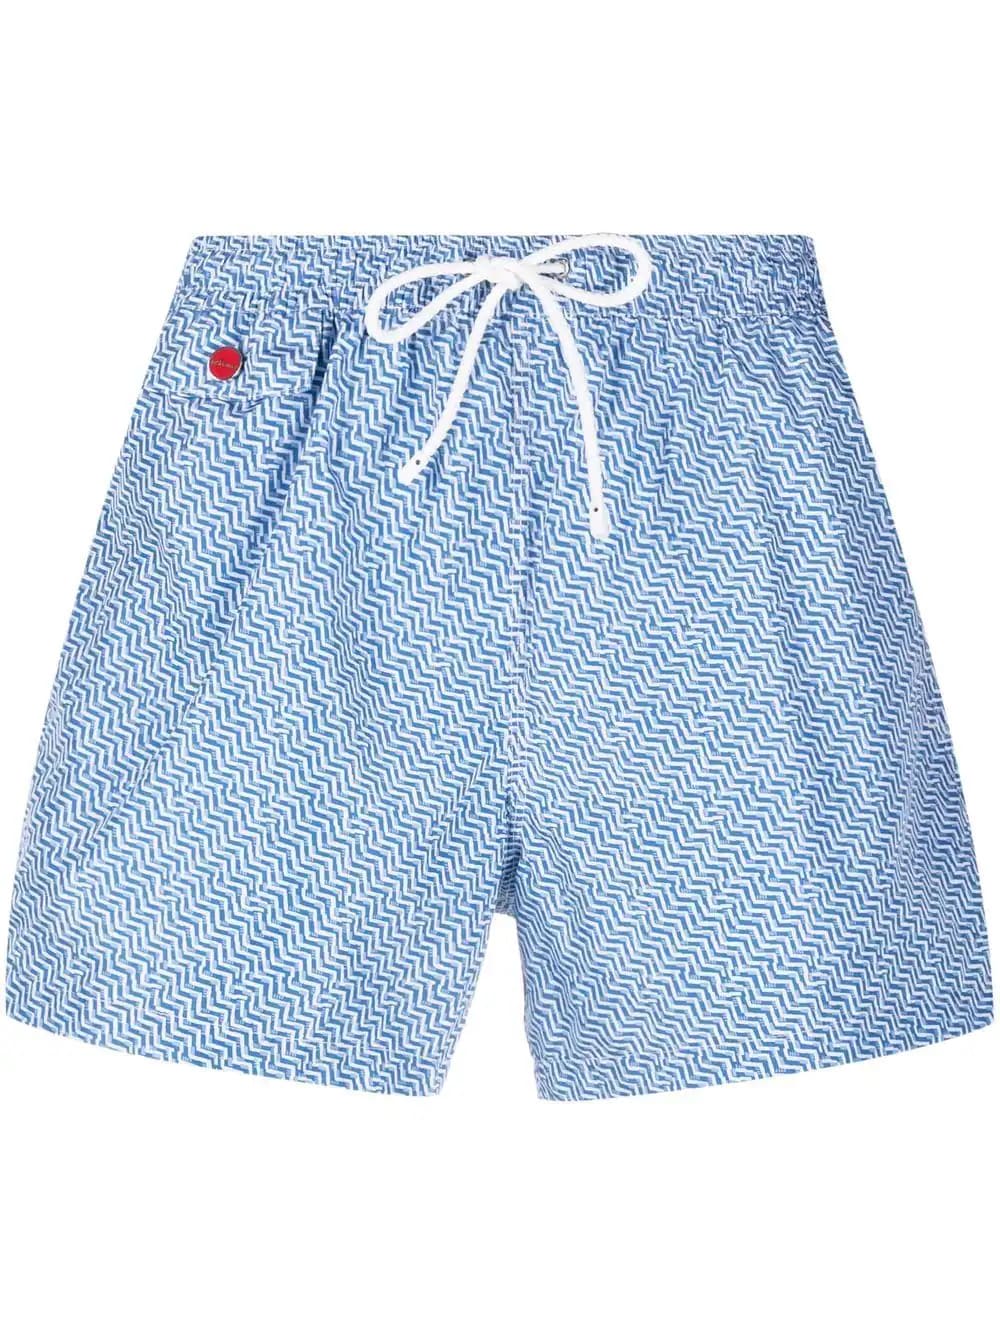 Kiton Swim Shorts With White And Blue Zig Zag Print